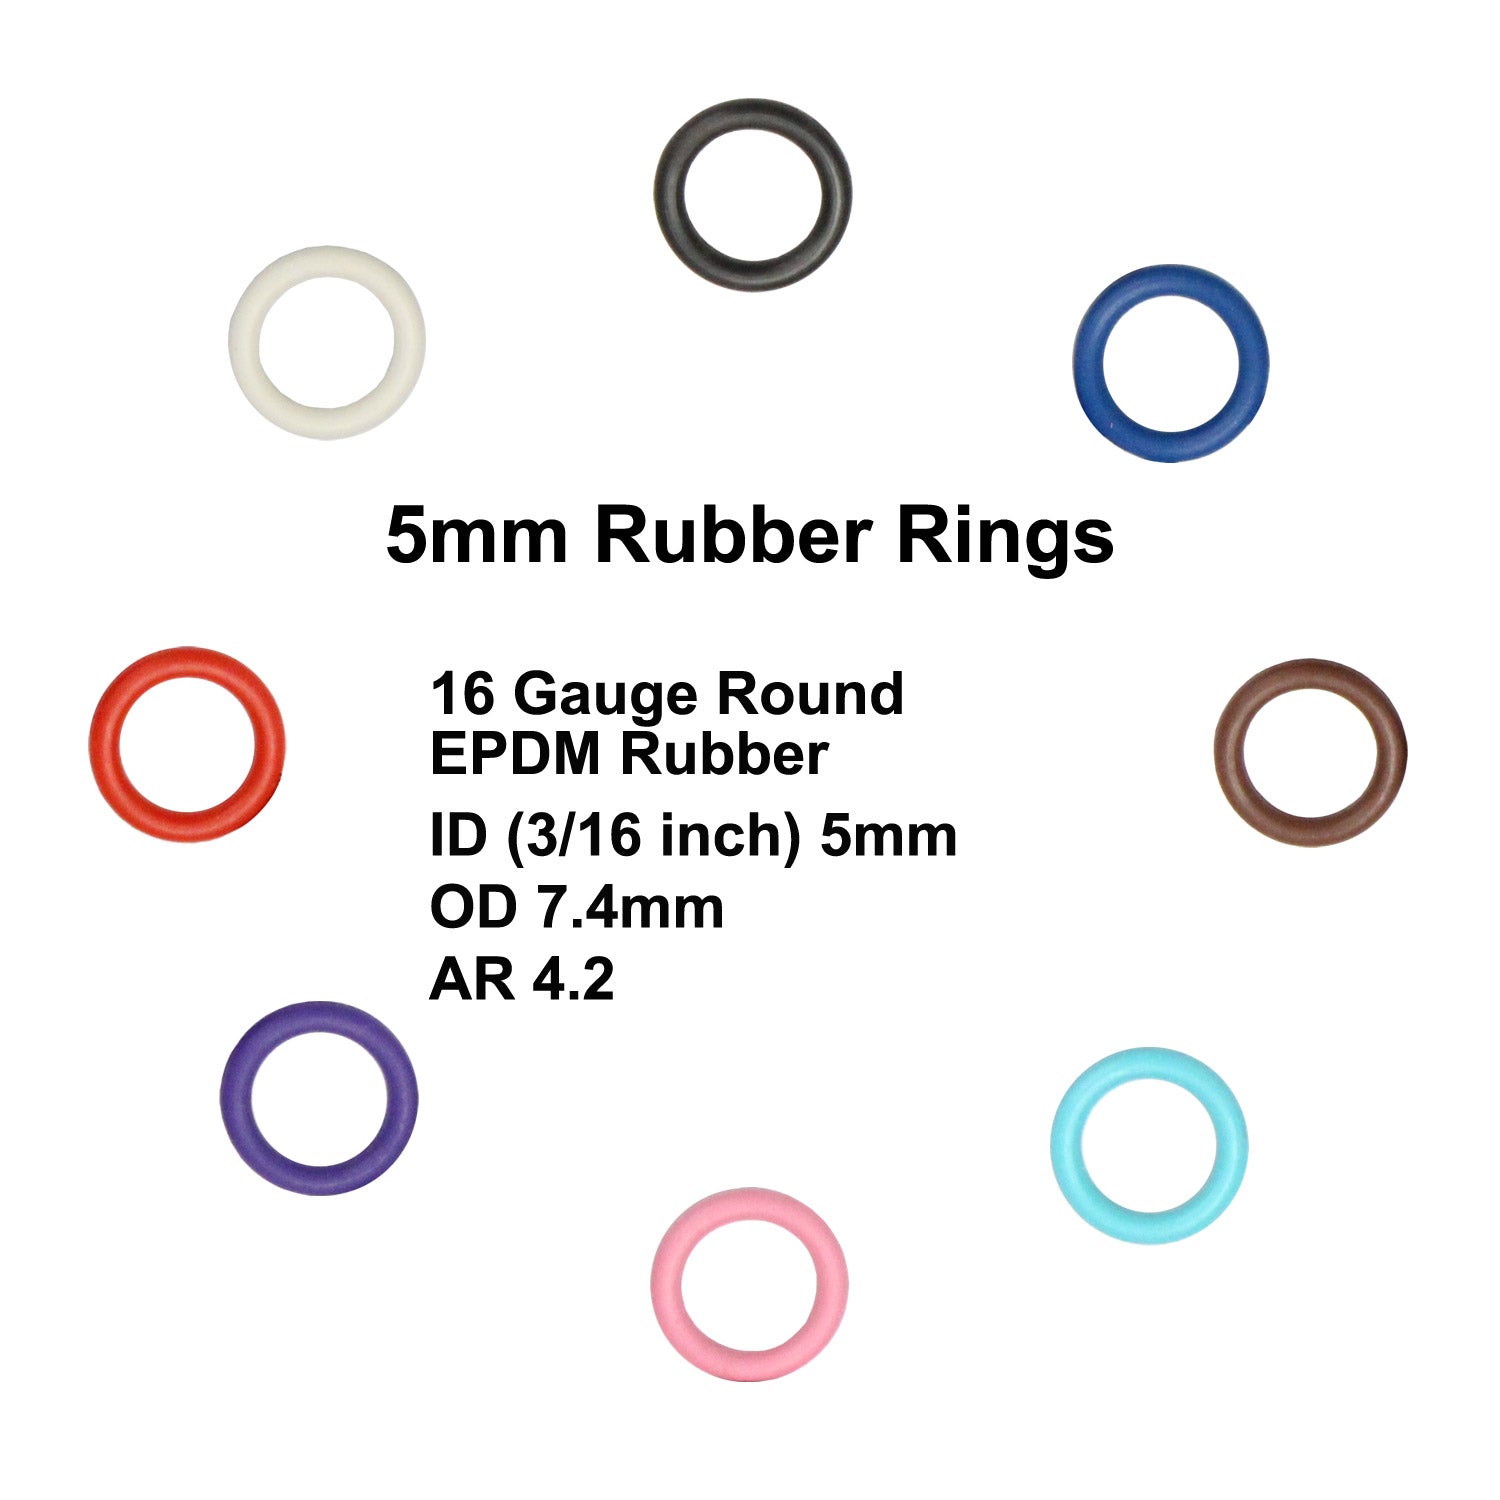 5mm Rubber Rings